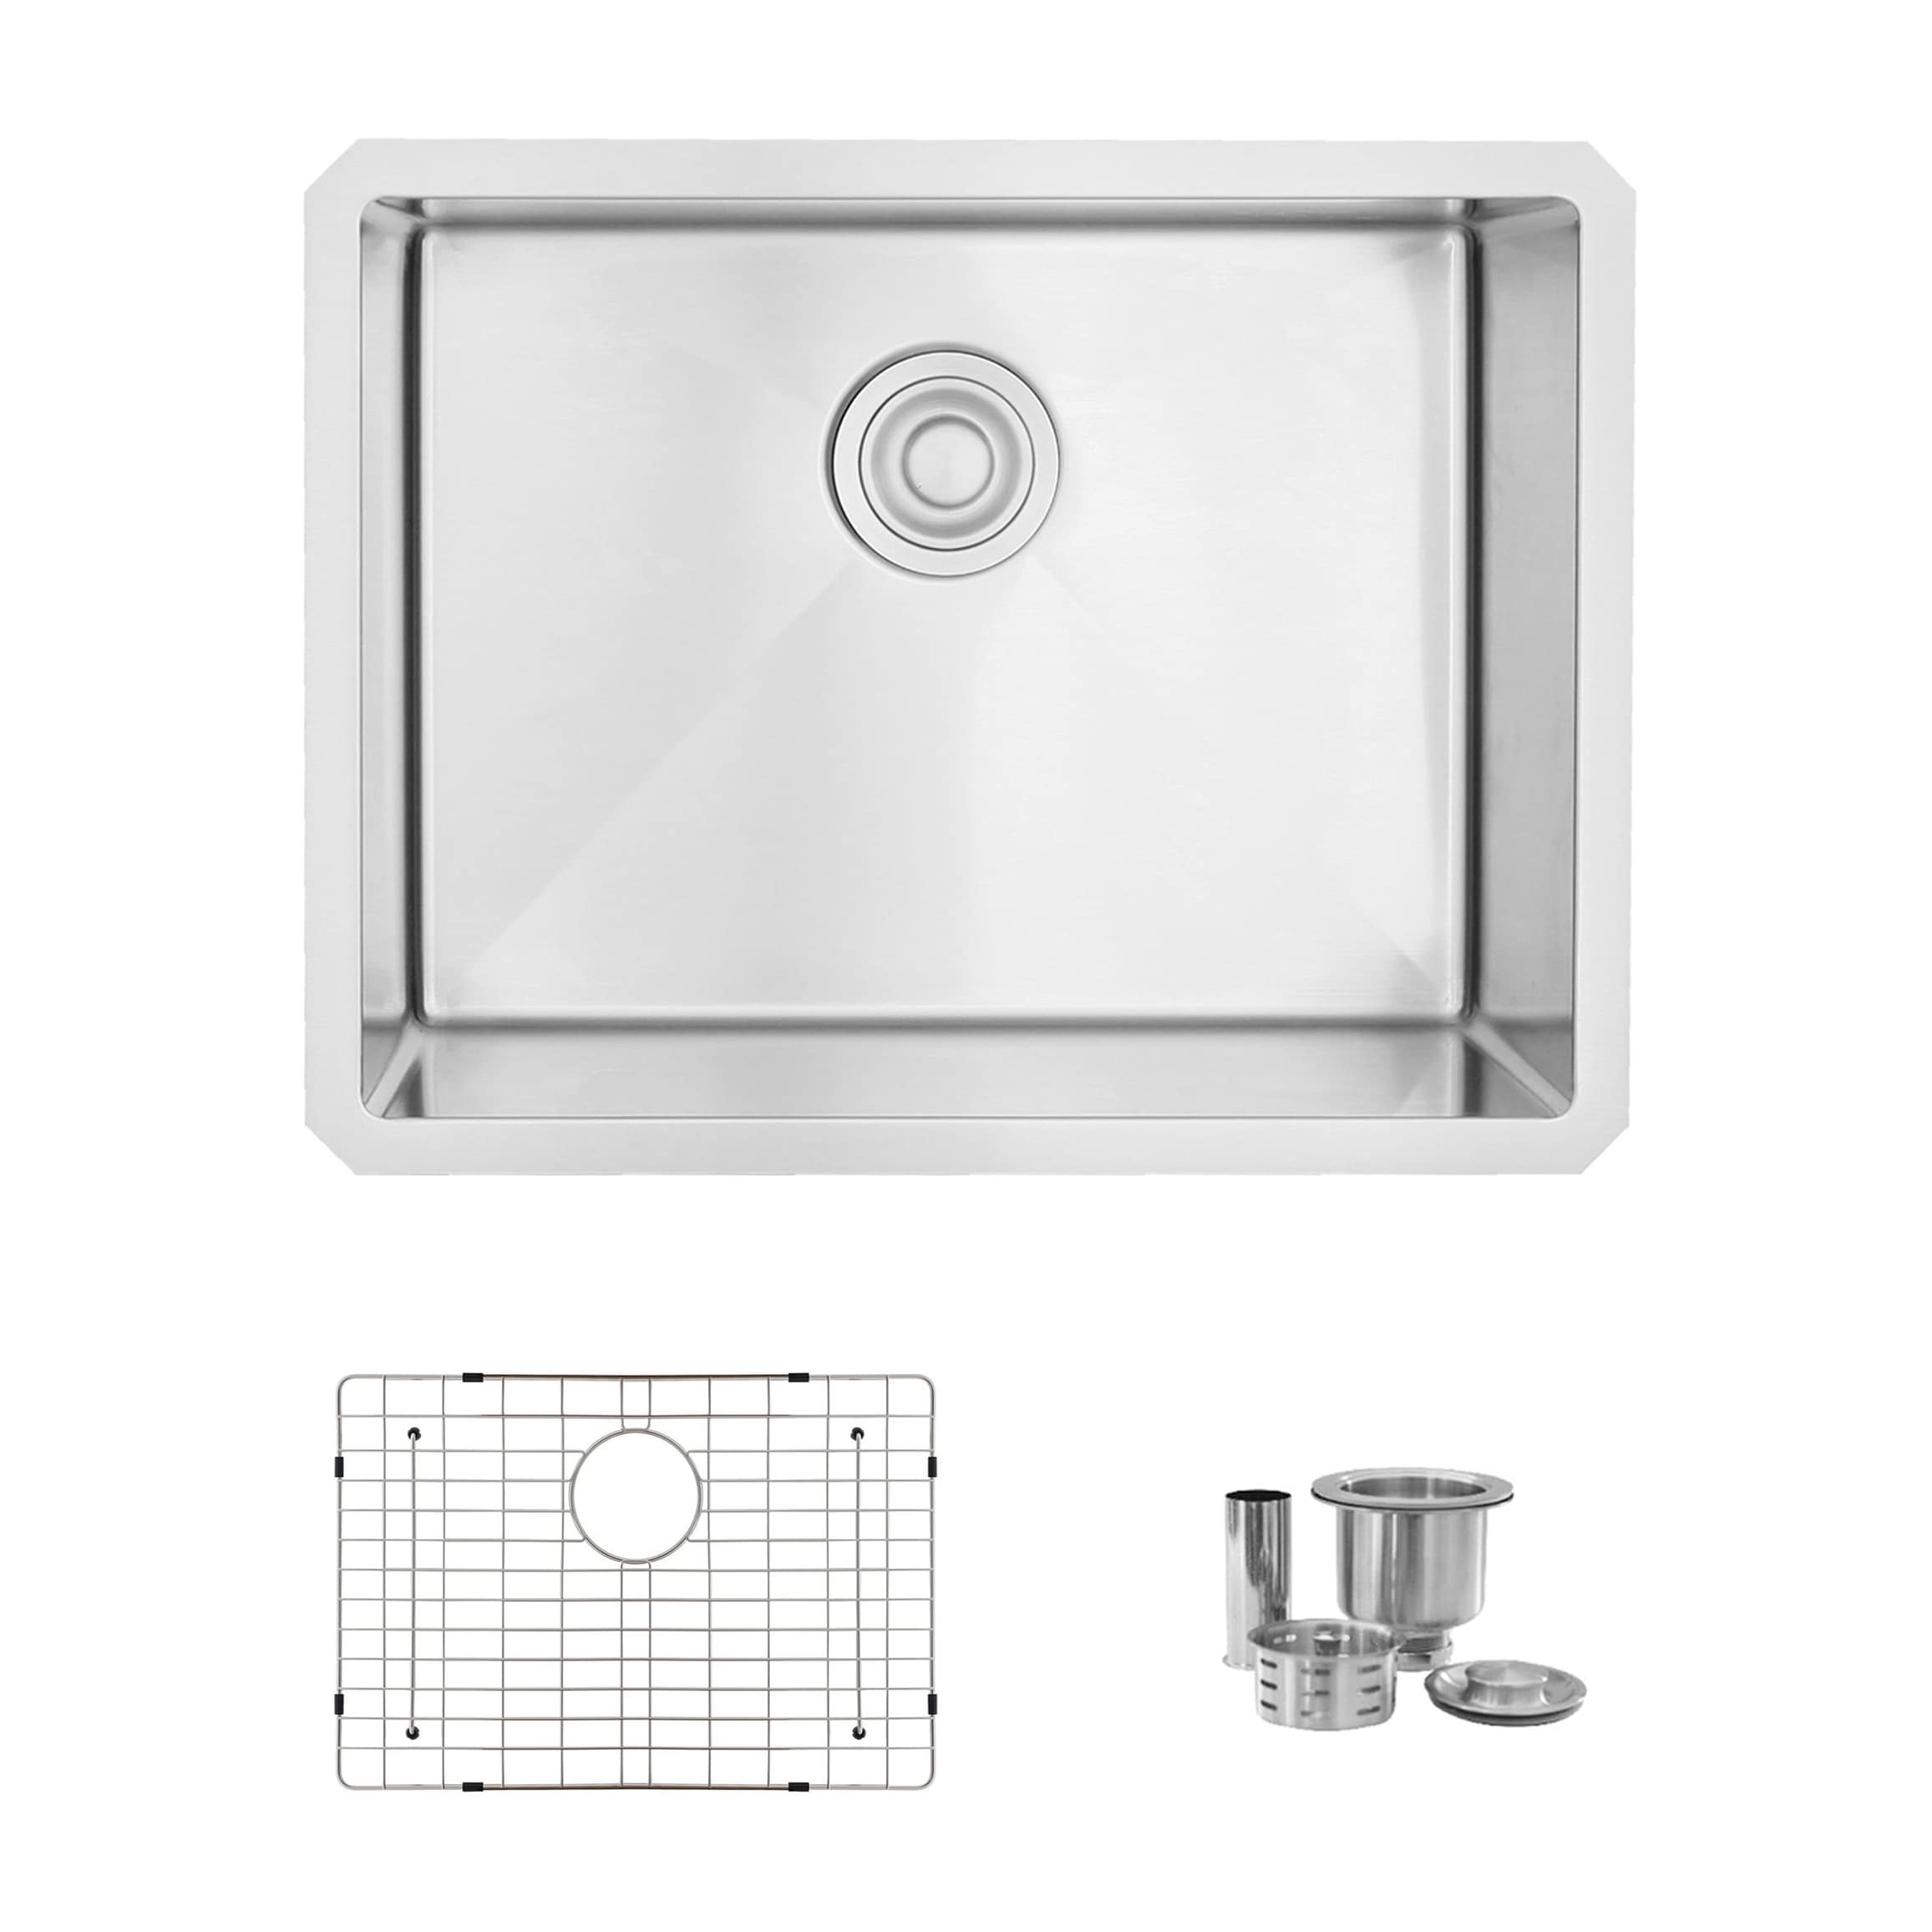 grid & drain for kitchen Details about   23"x18"x9 16 Gauge Handmade Stainless Undermount sink